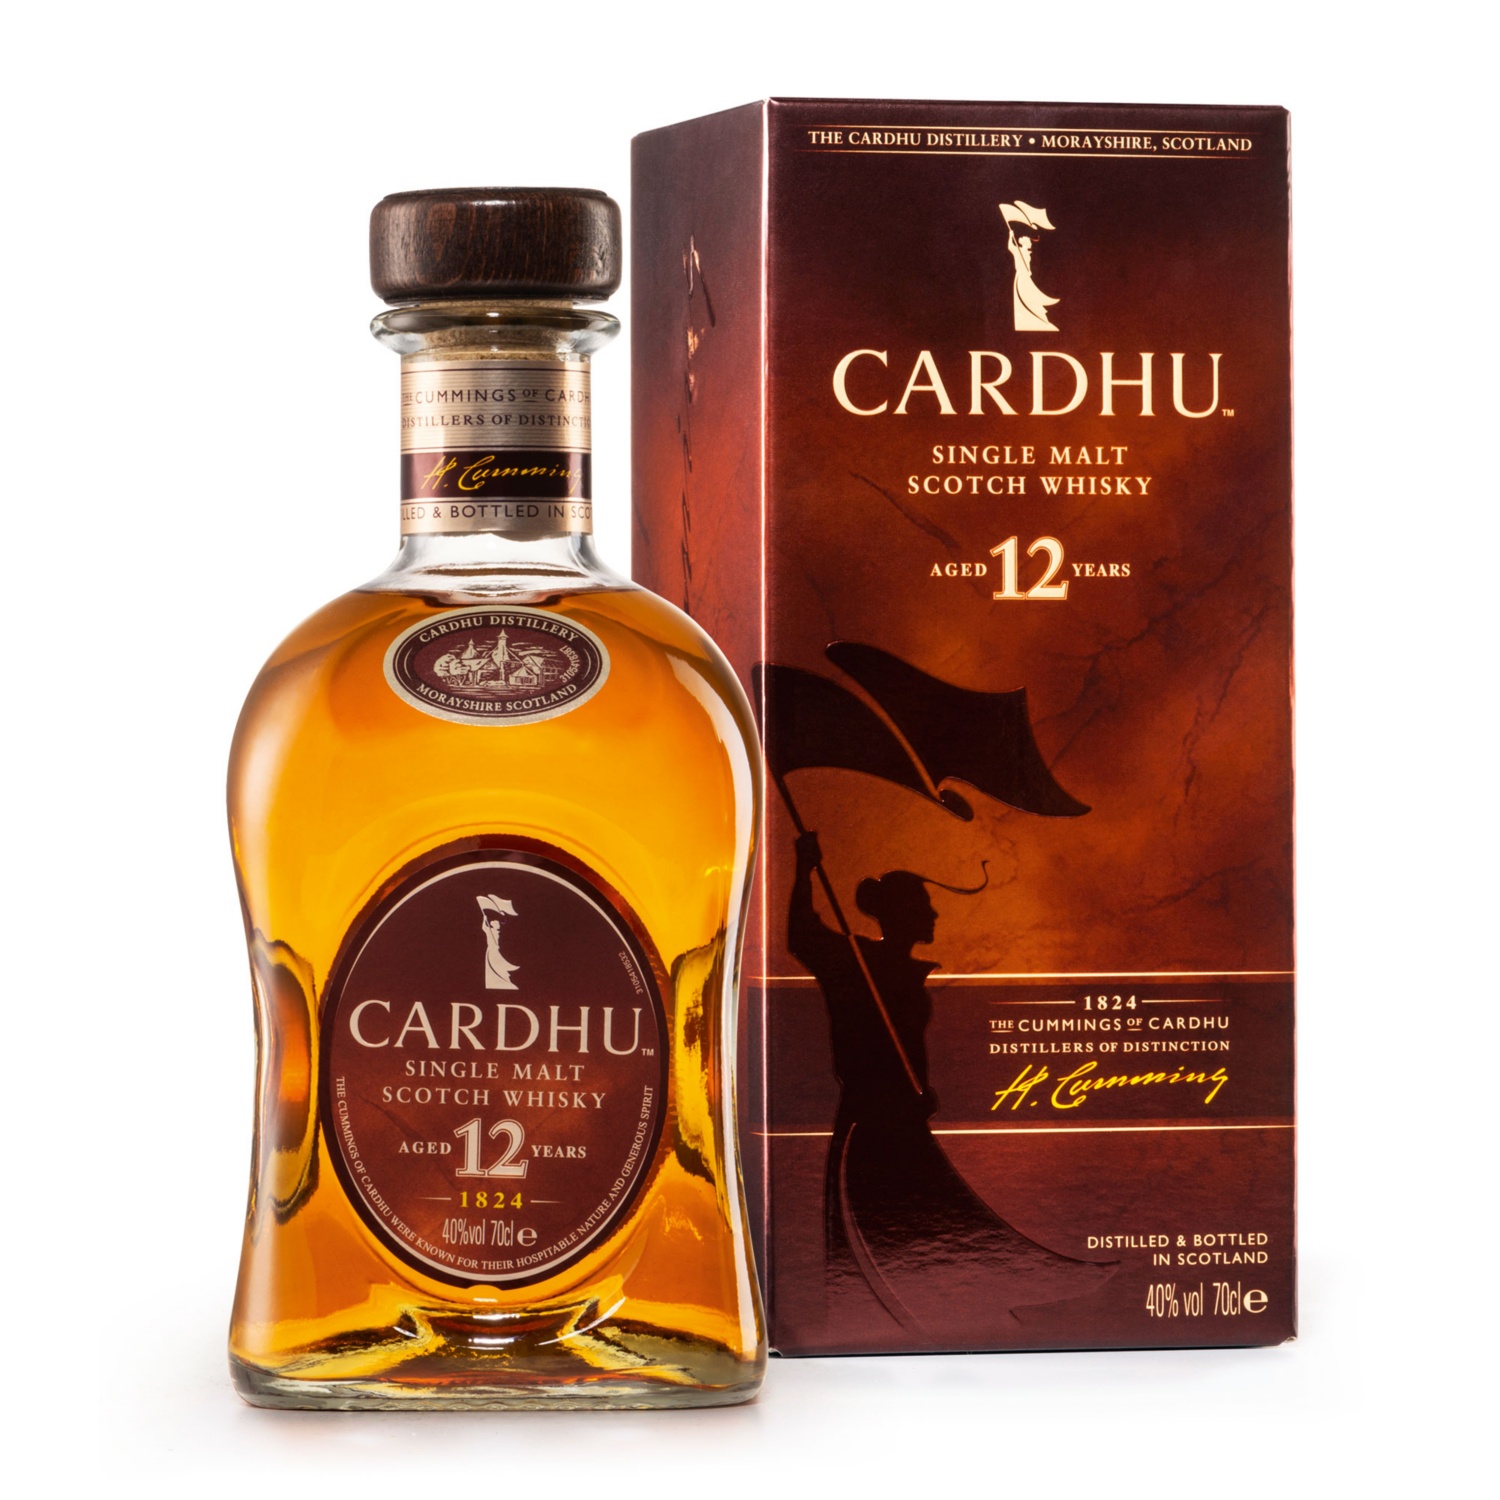 CARDHU Single Malt Scotch Whisky